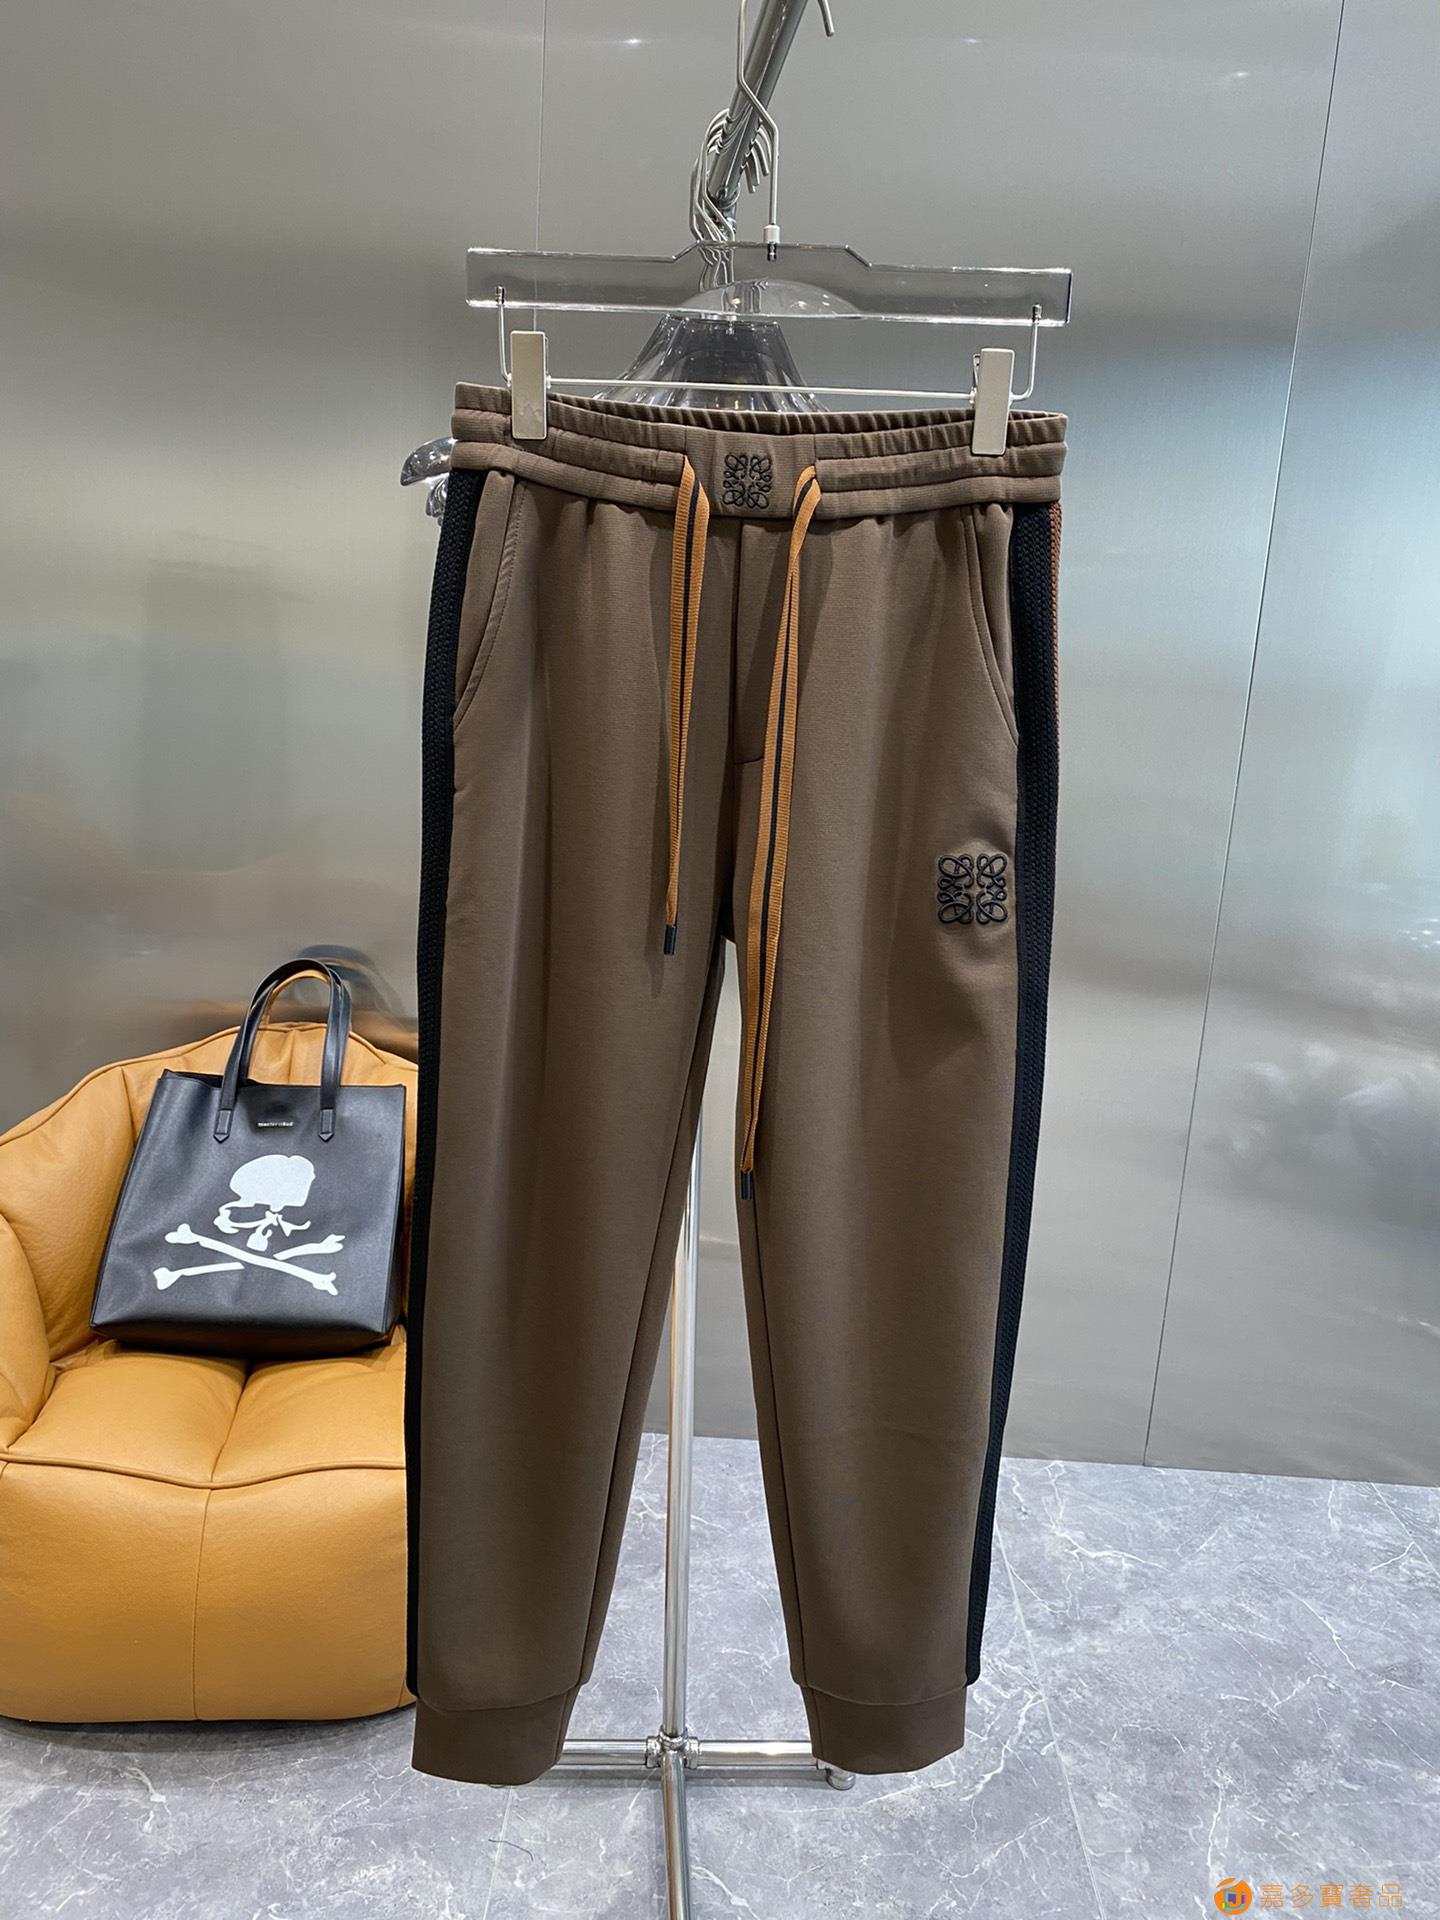 New罗意威秋冬新品休闲裤,官网同步发售,裤身工艺设计,进口